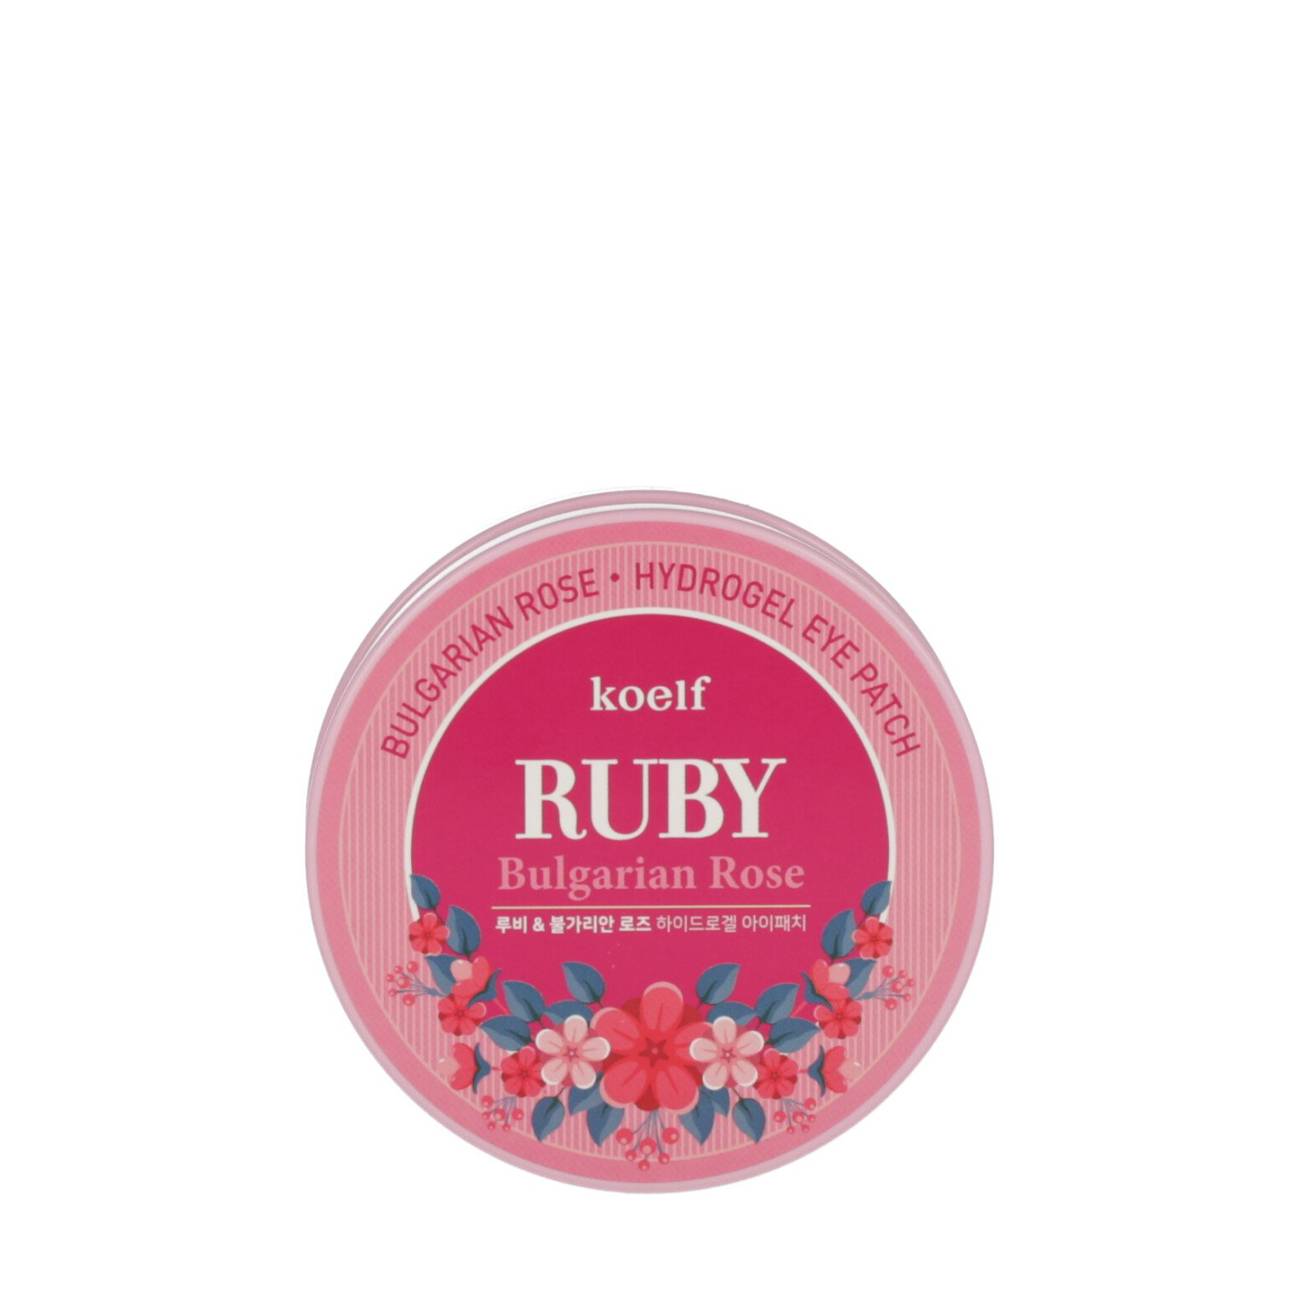 Ruby & Bulgarian Rose Eye Patch – 60 Pieces bestvalue.eu